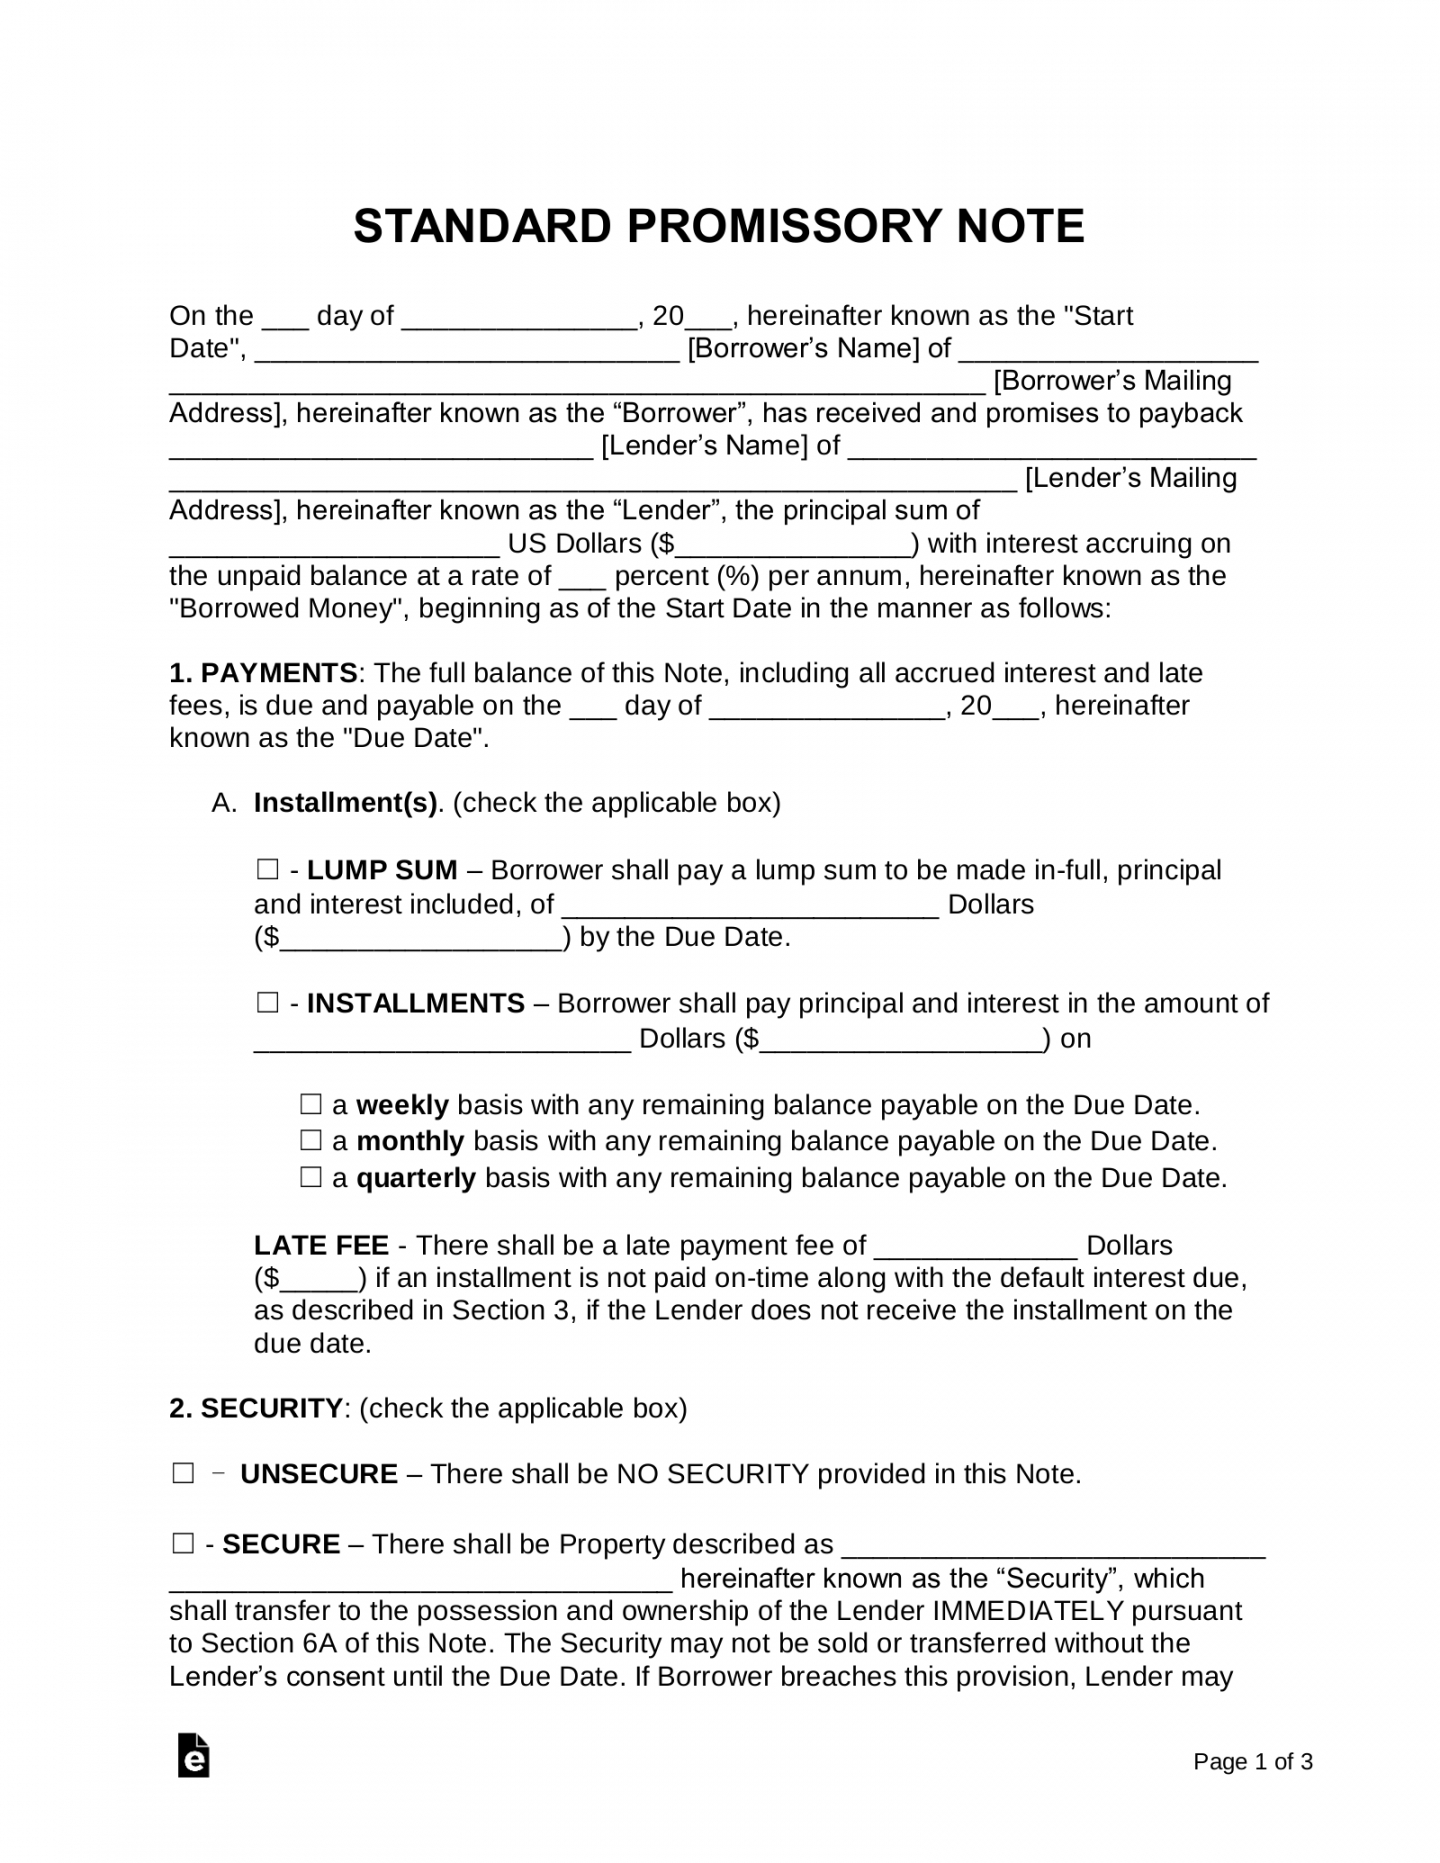 sample free promissory note templates  word  pdf  eforms  free corporate promissory note template example